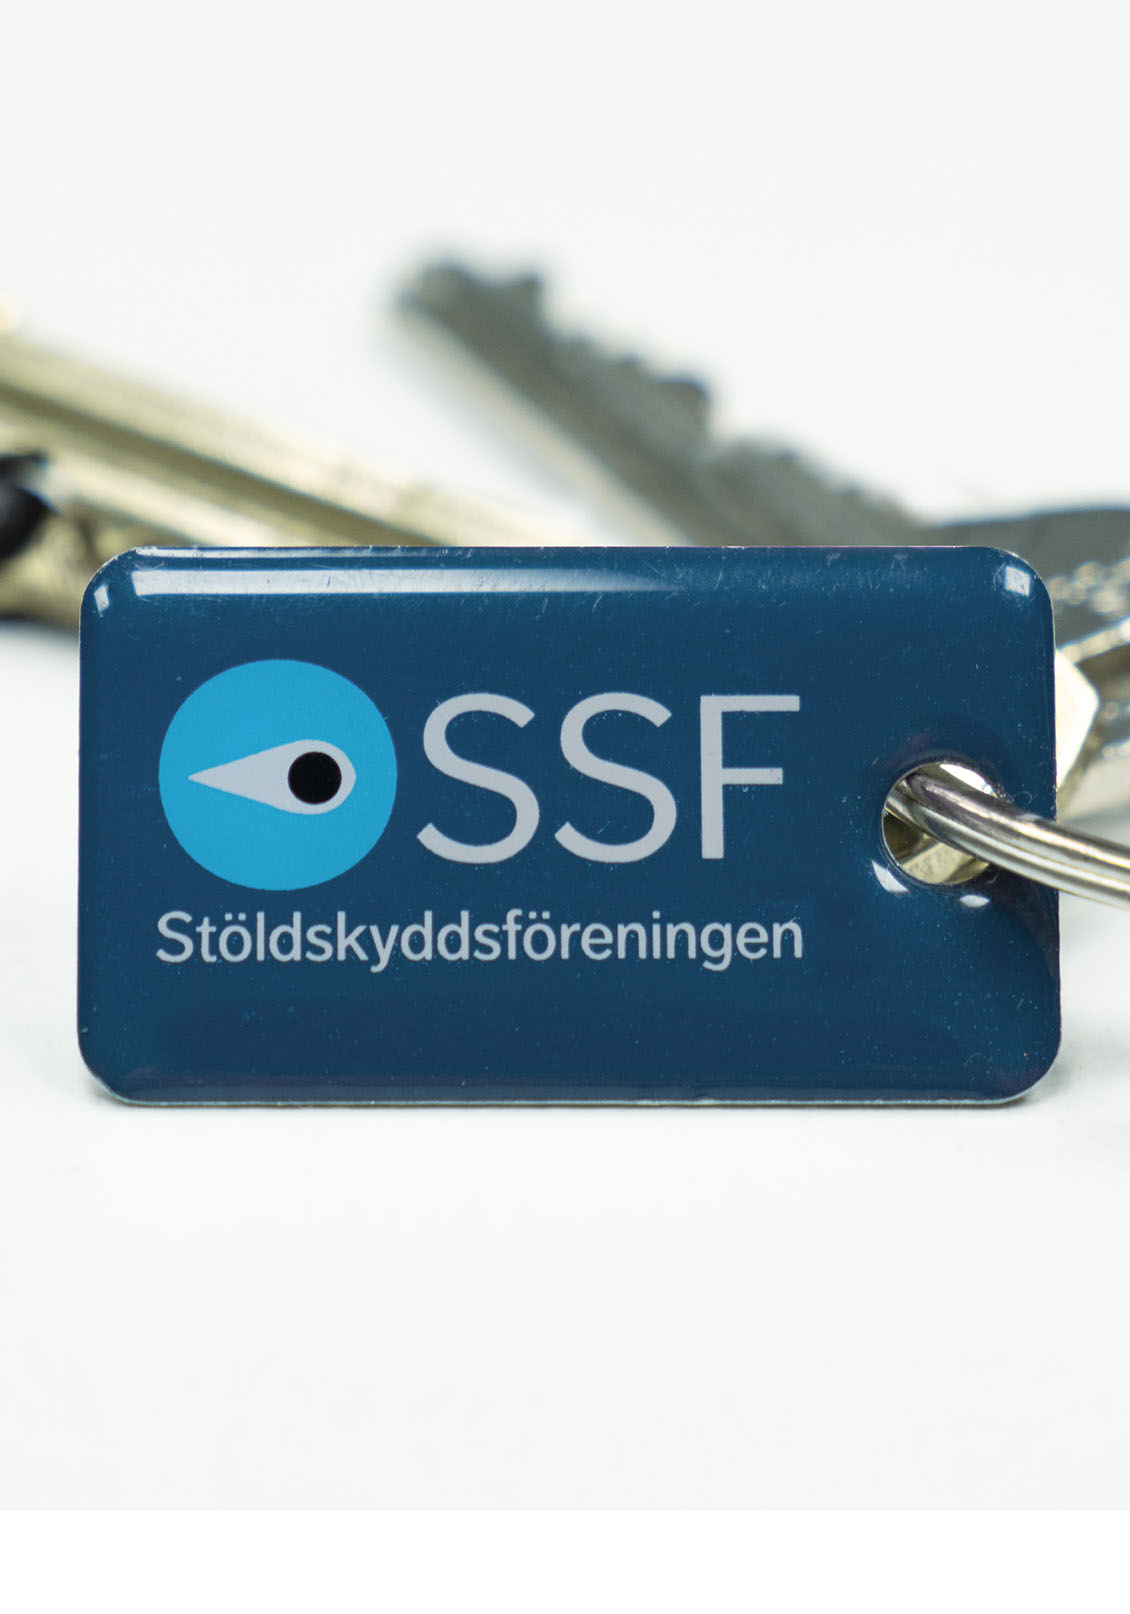 SSF Nyckelbricka – halva priset